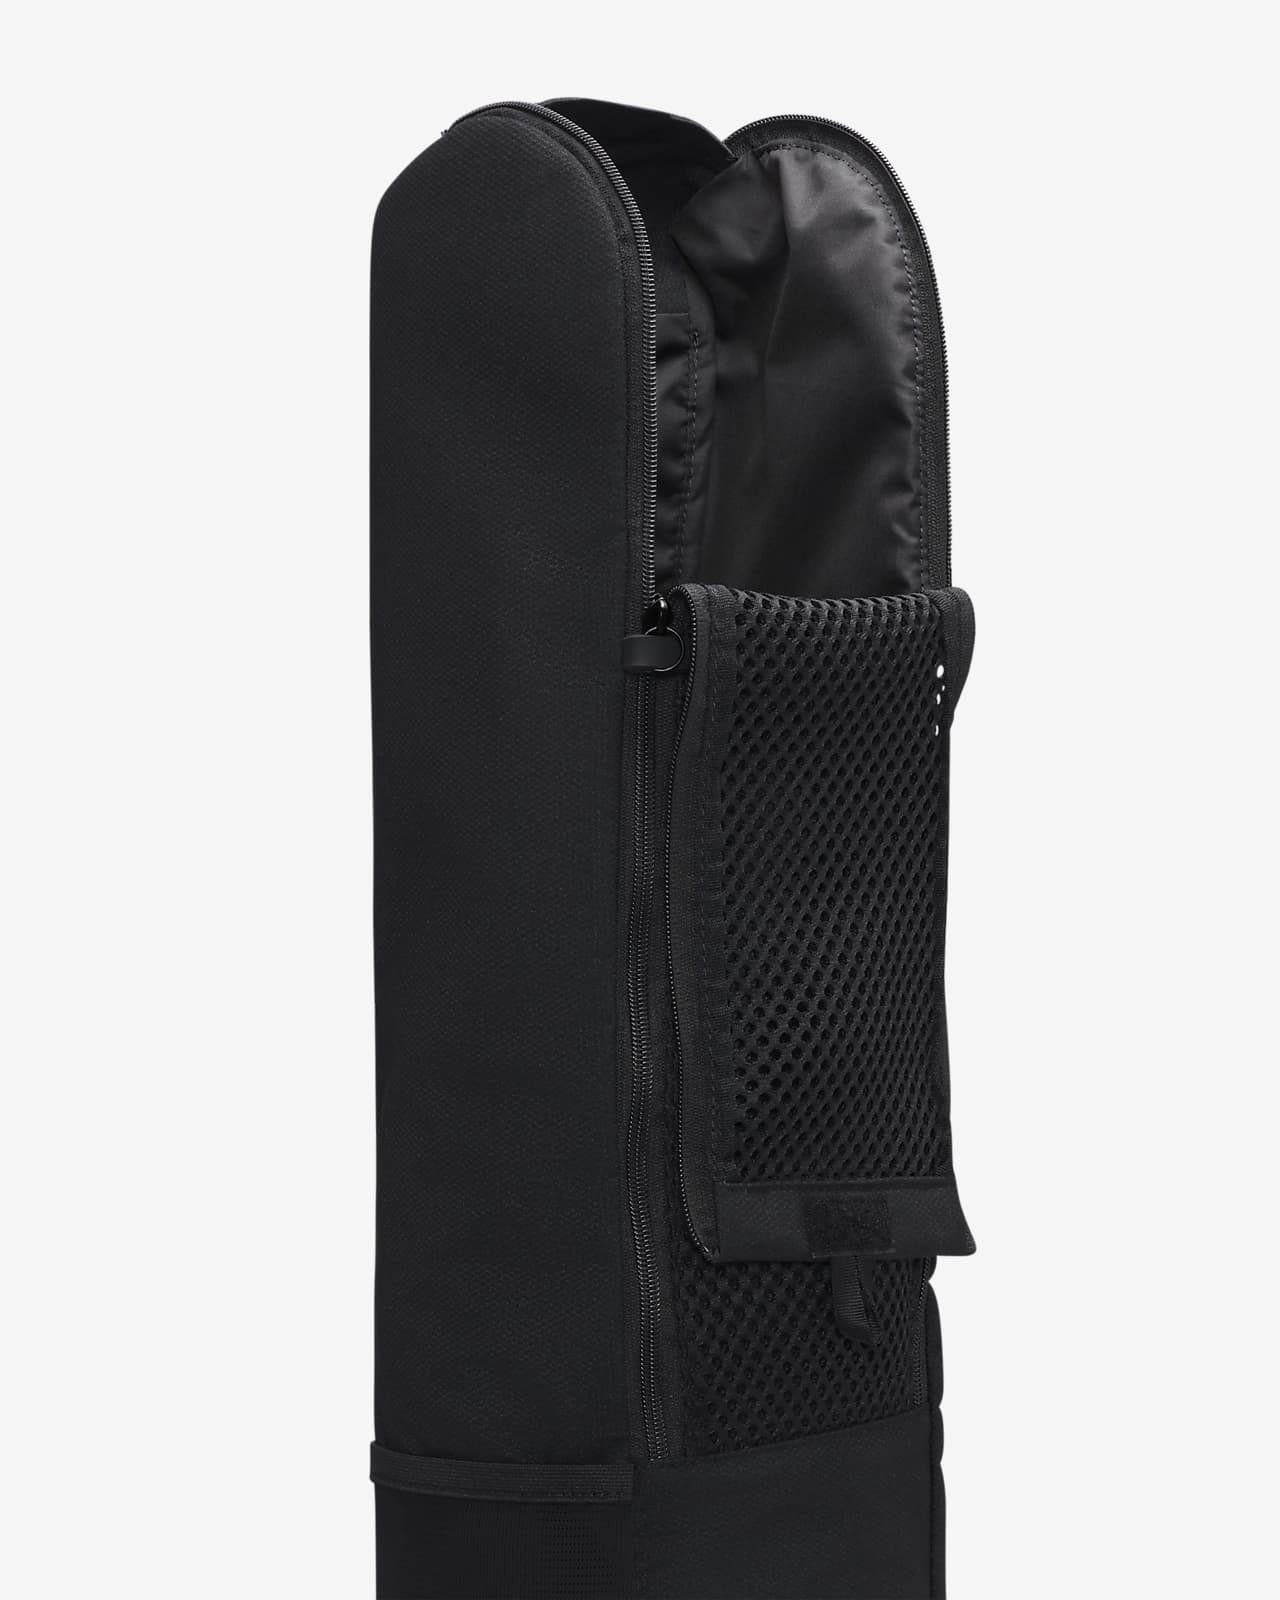 Nike Yoga Mat Bag, Black, Polyester